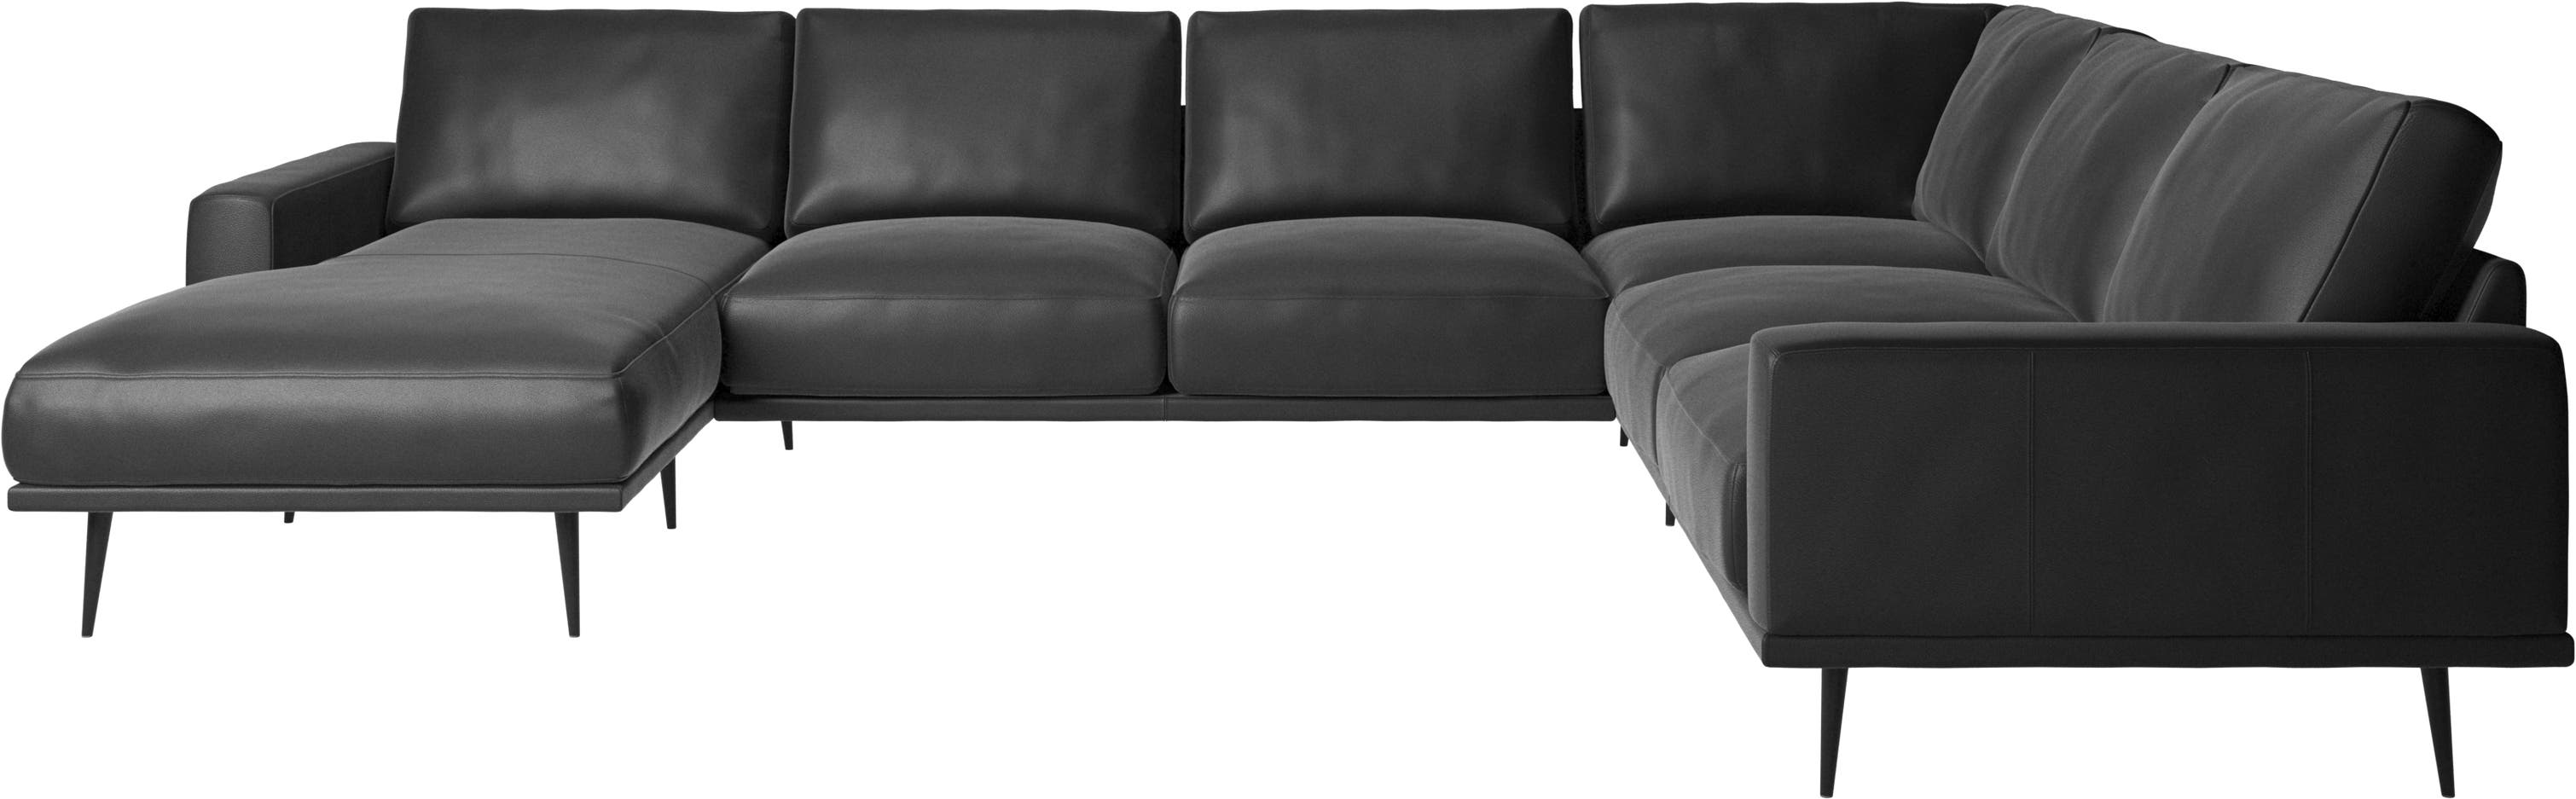 Carlton corner sofa with resting unit